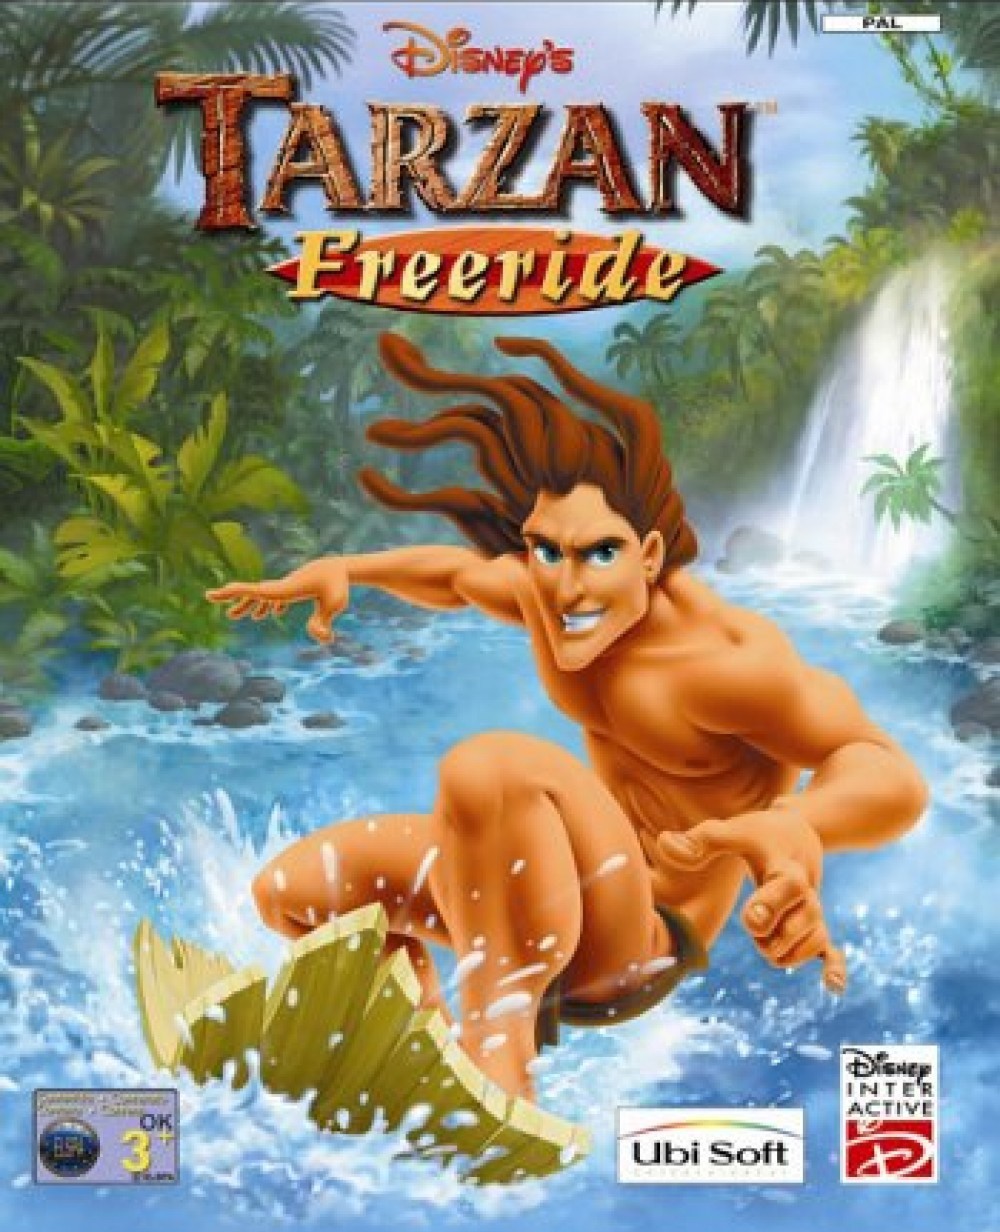 Disney's Tarzan - Freeride